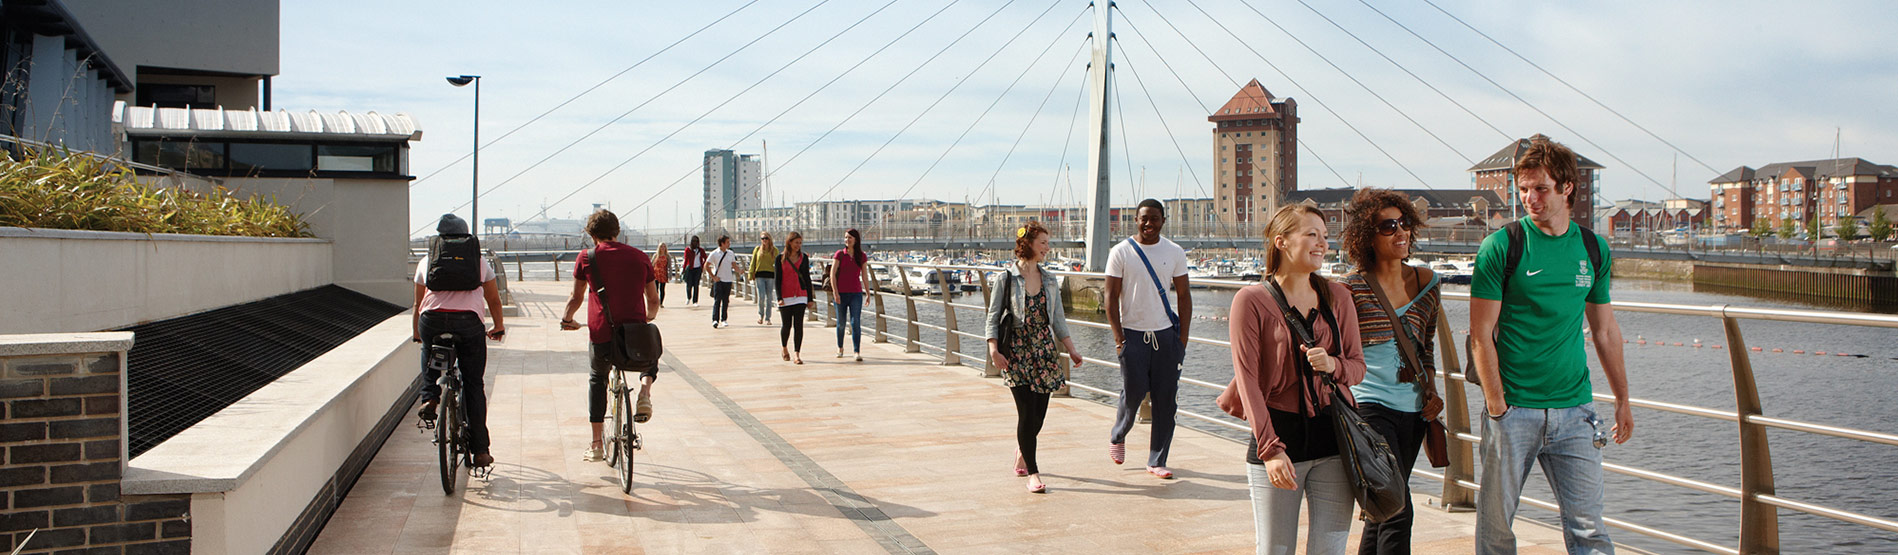 Students walking around the SA1 area of Swansea Marina.